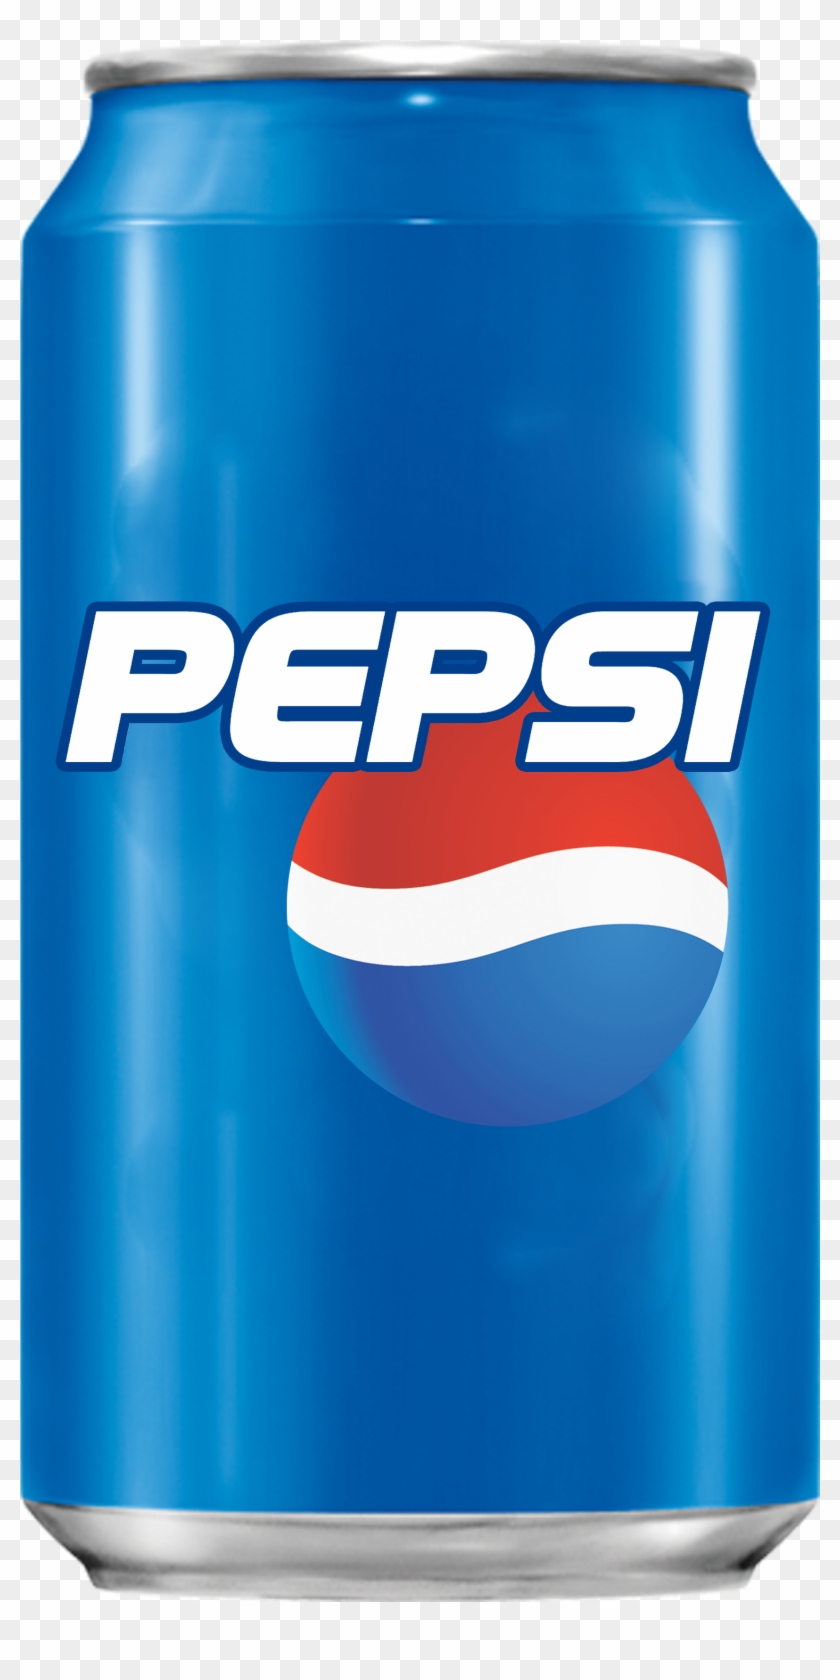 Pepsi Can Clipart - Pepsi-cola Soda 12-12 Fl. Oz. Cans #70932